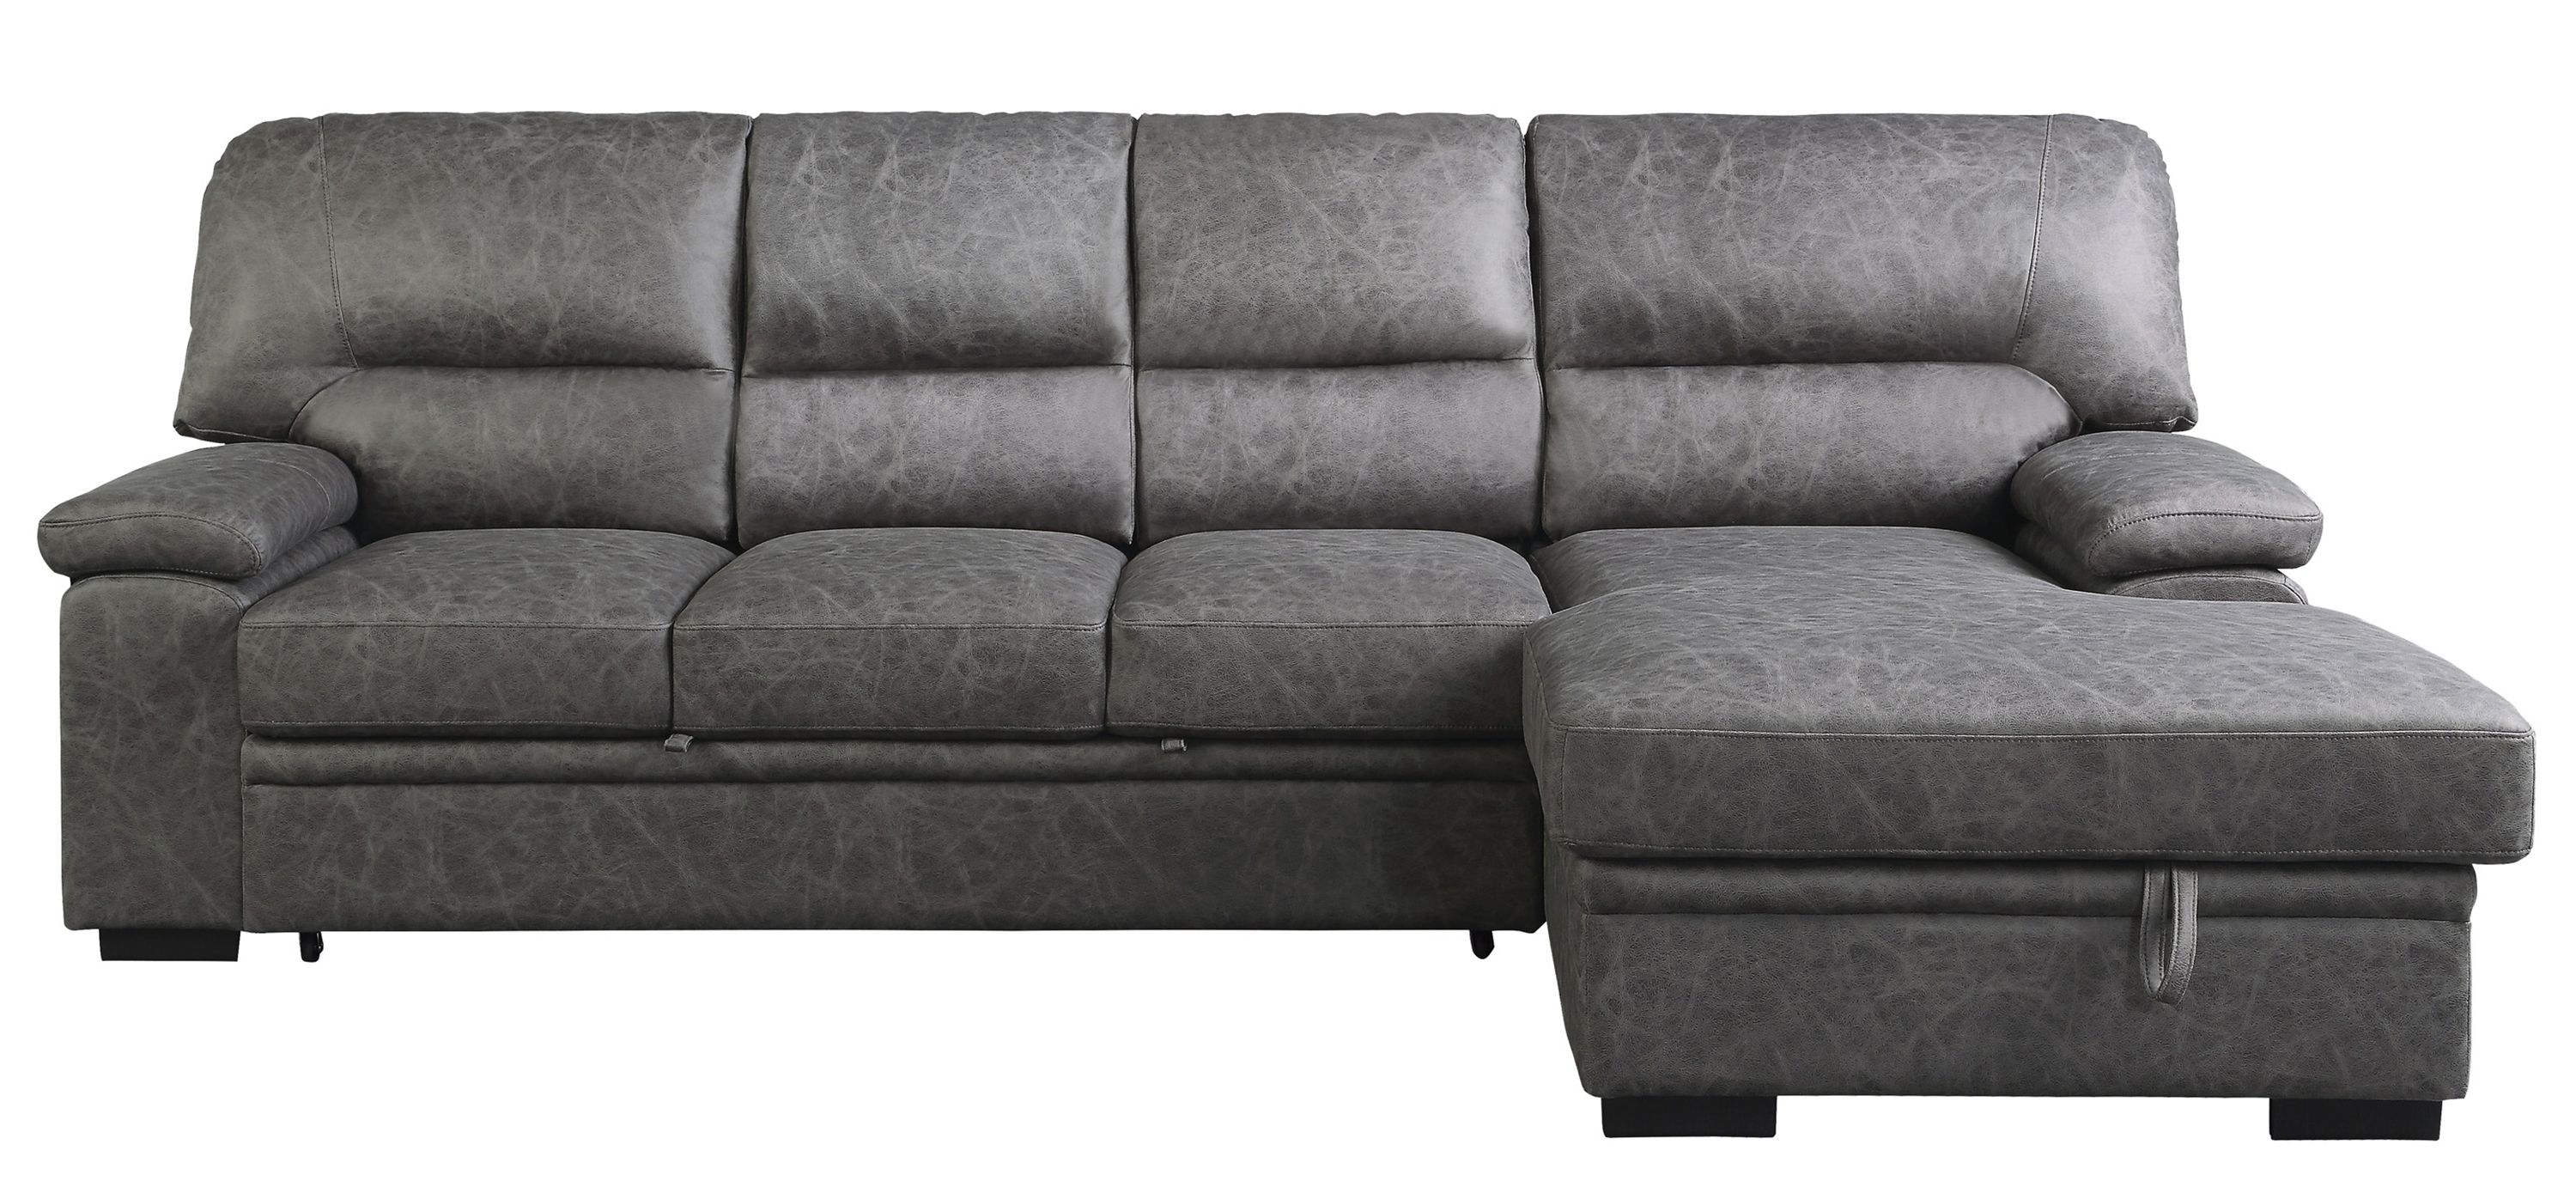 Mendon 2-pc. Sectional Sleeper Sofa w/ Storage